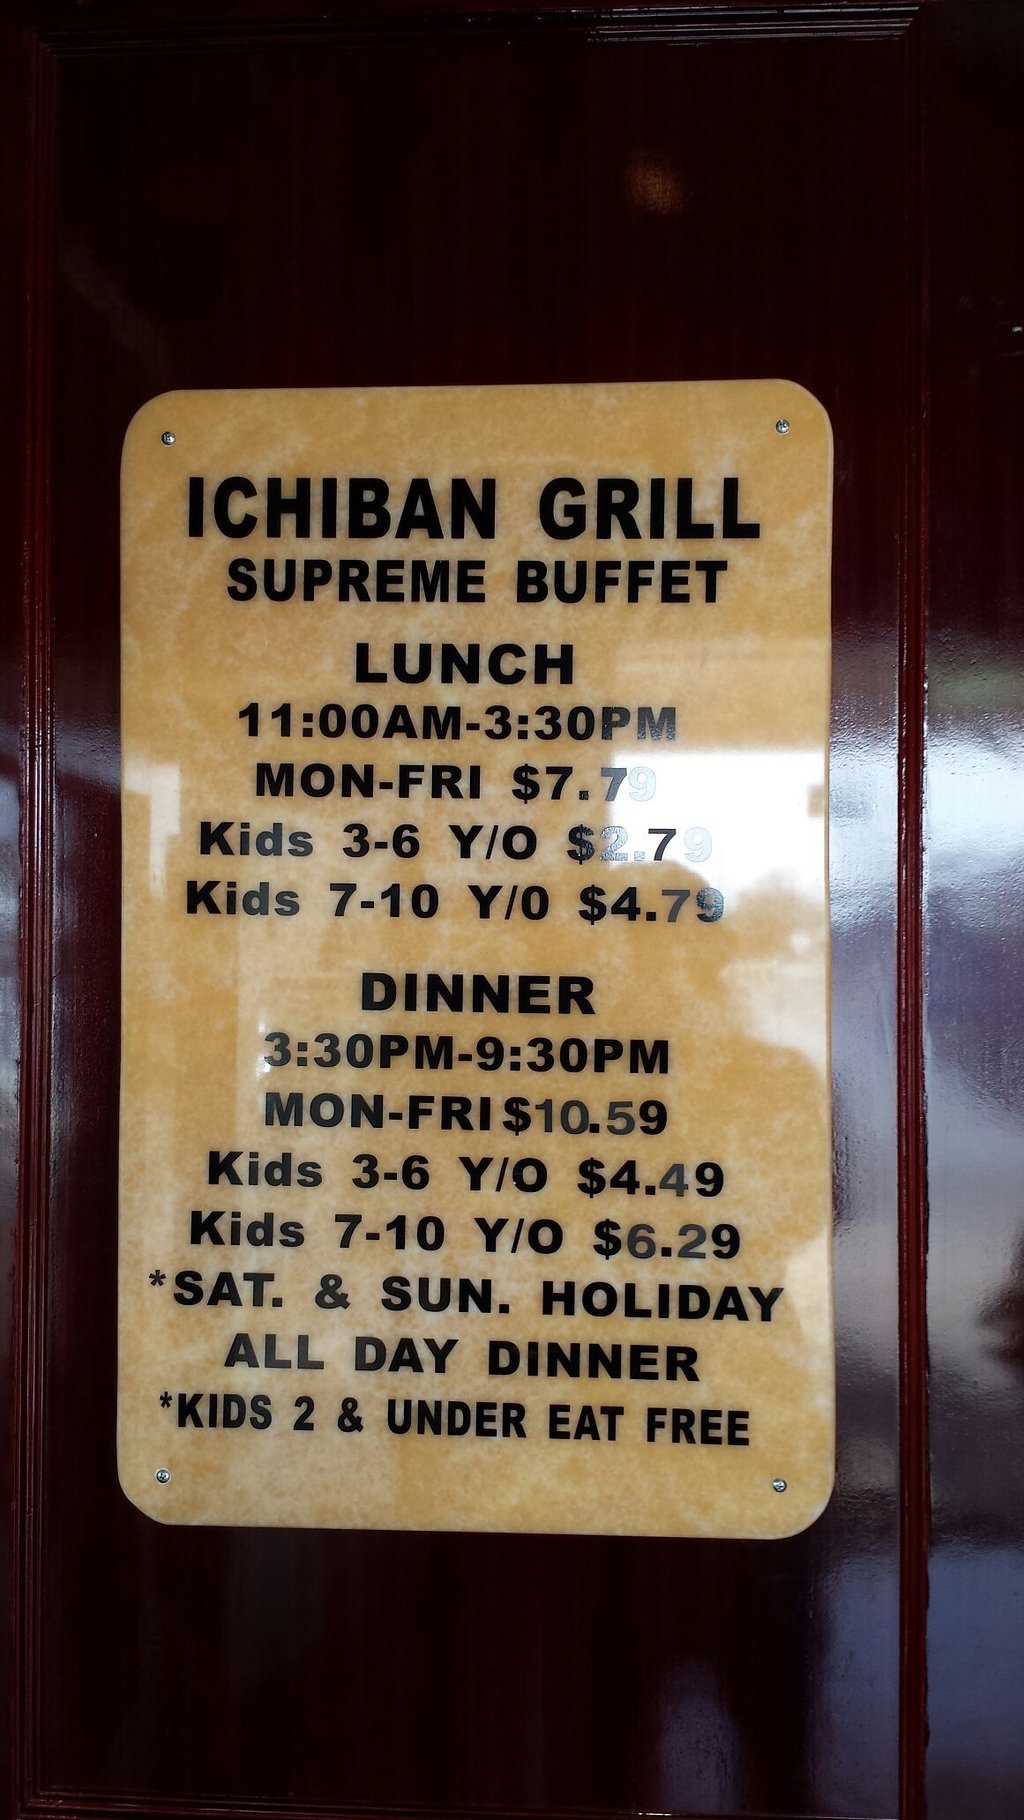 Ichiban Grill Supreme Buffet